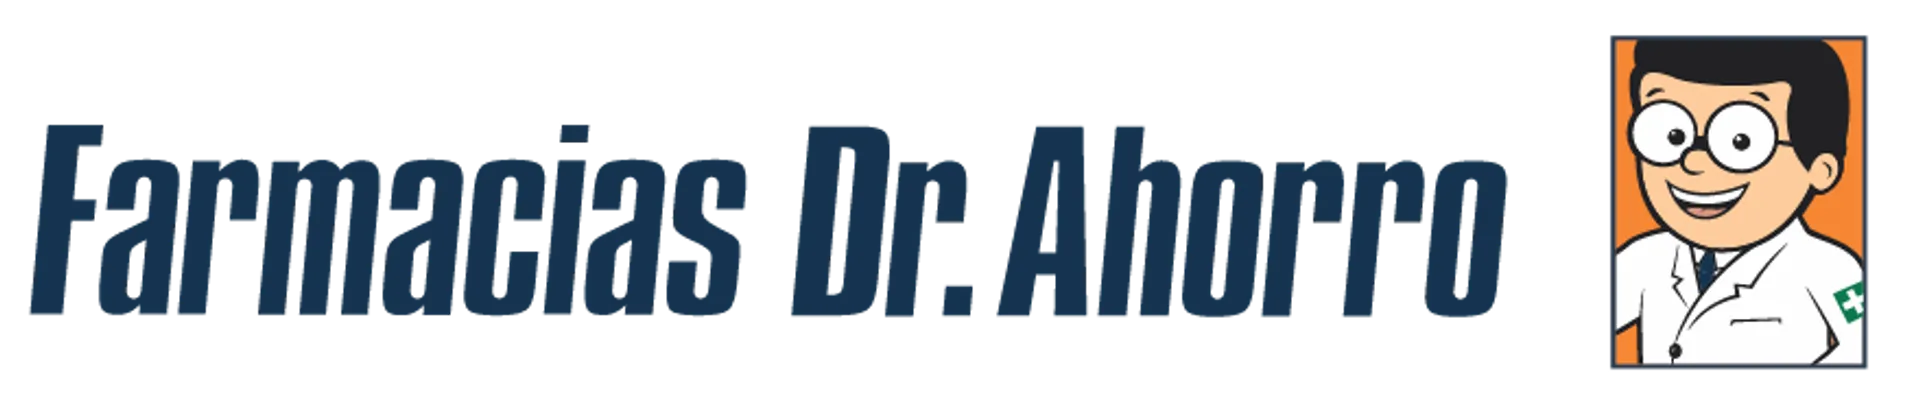 FARMACIAS DEL DR. AHORRO logo de catálogo